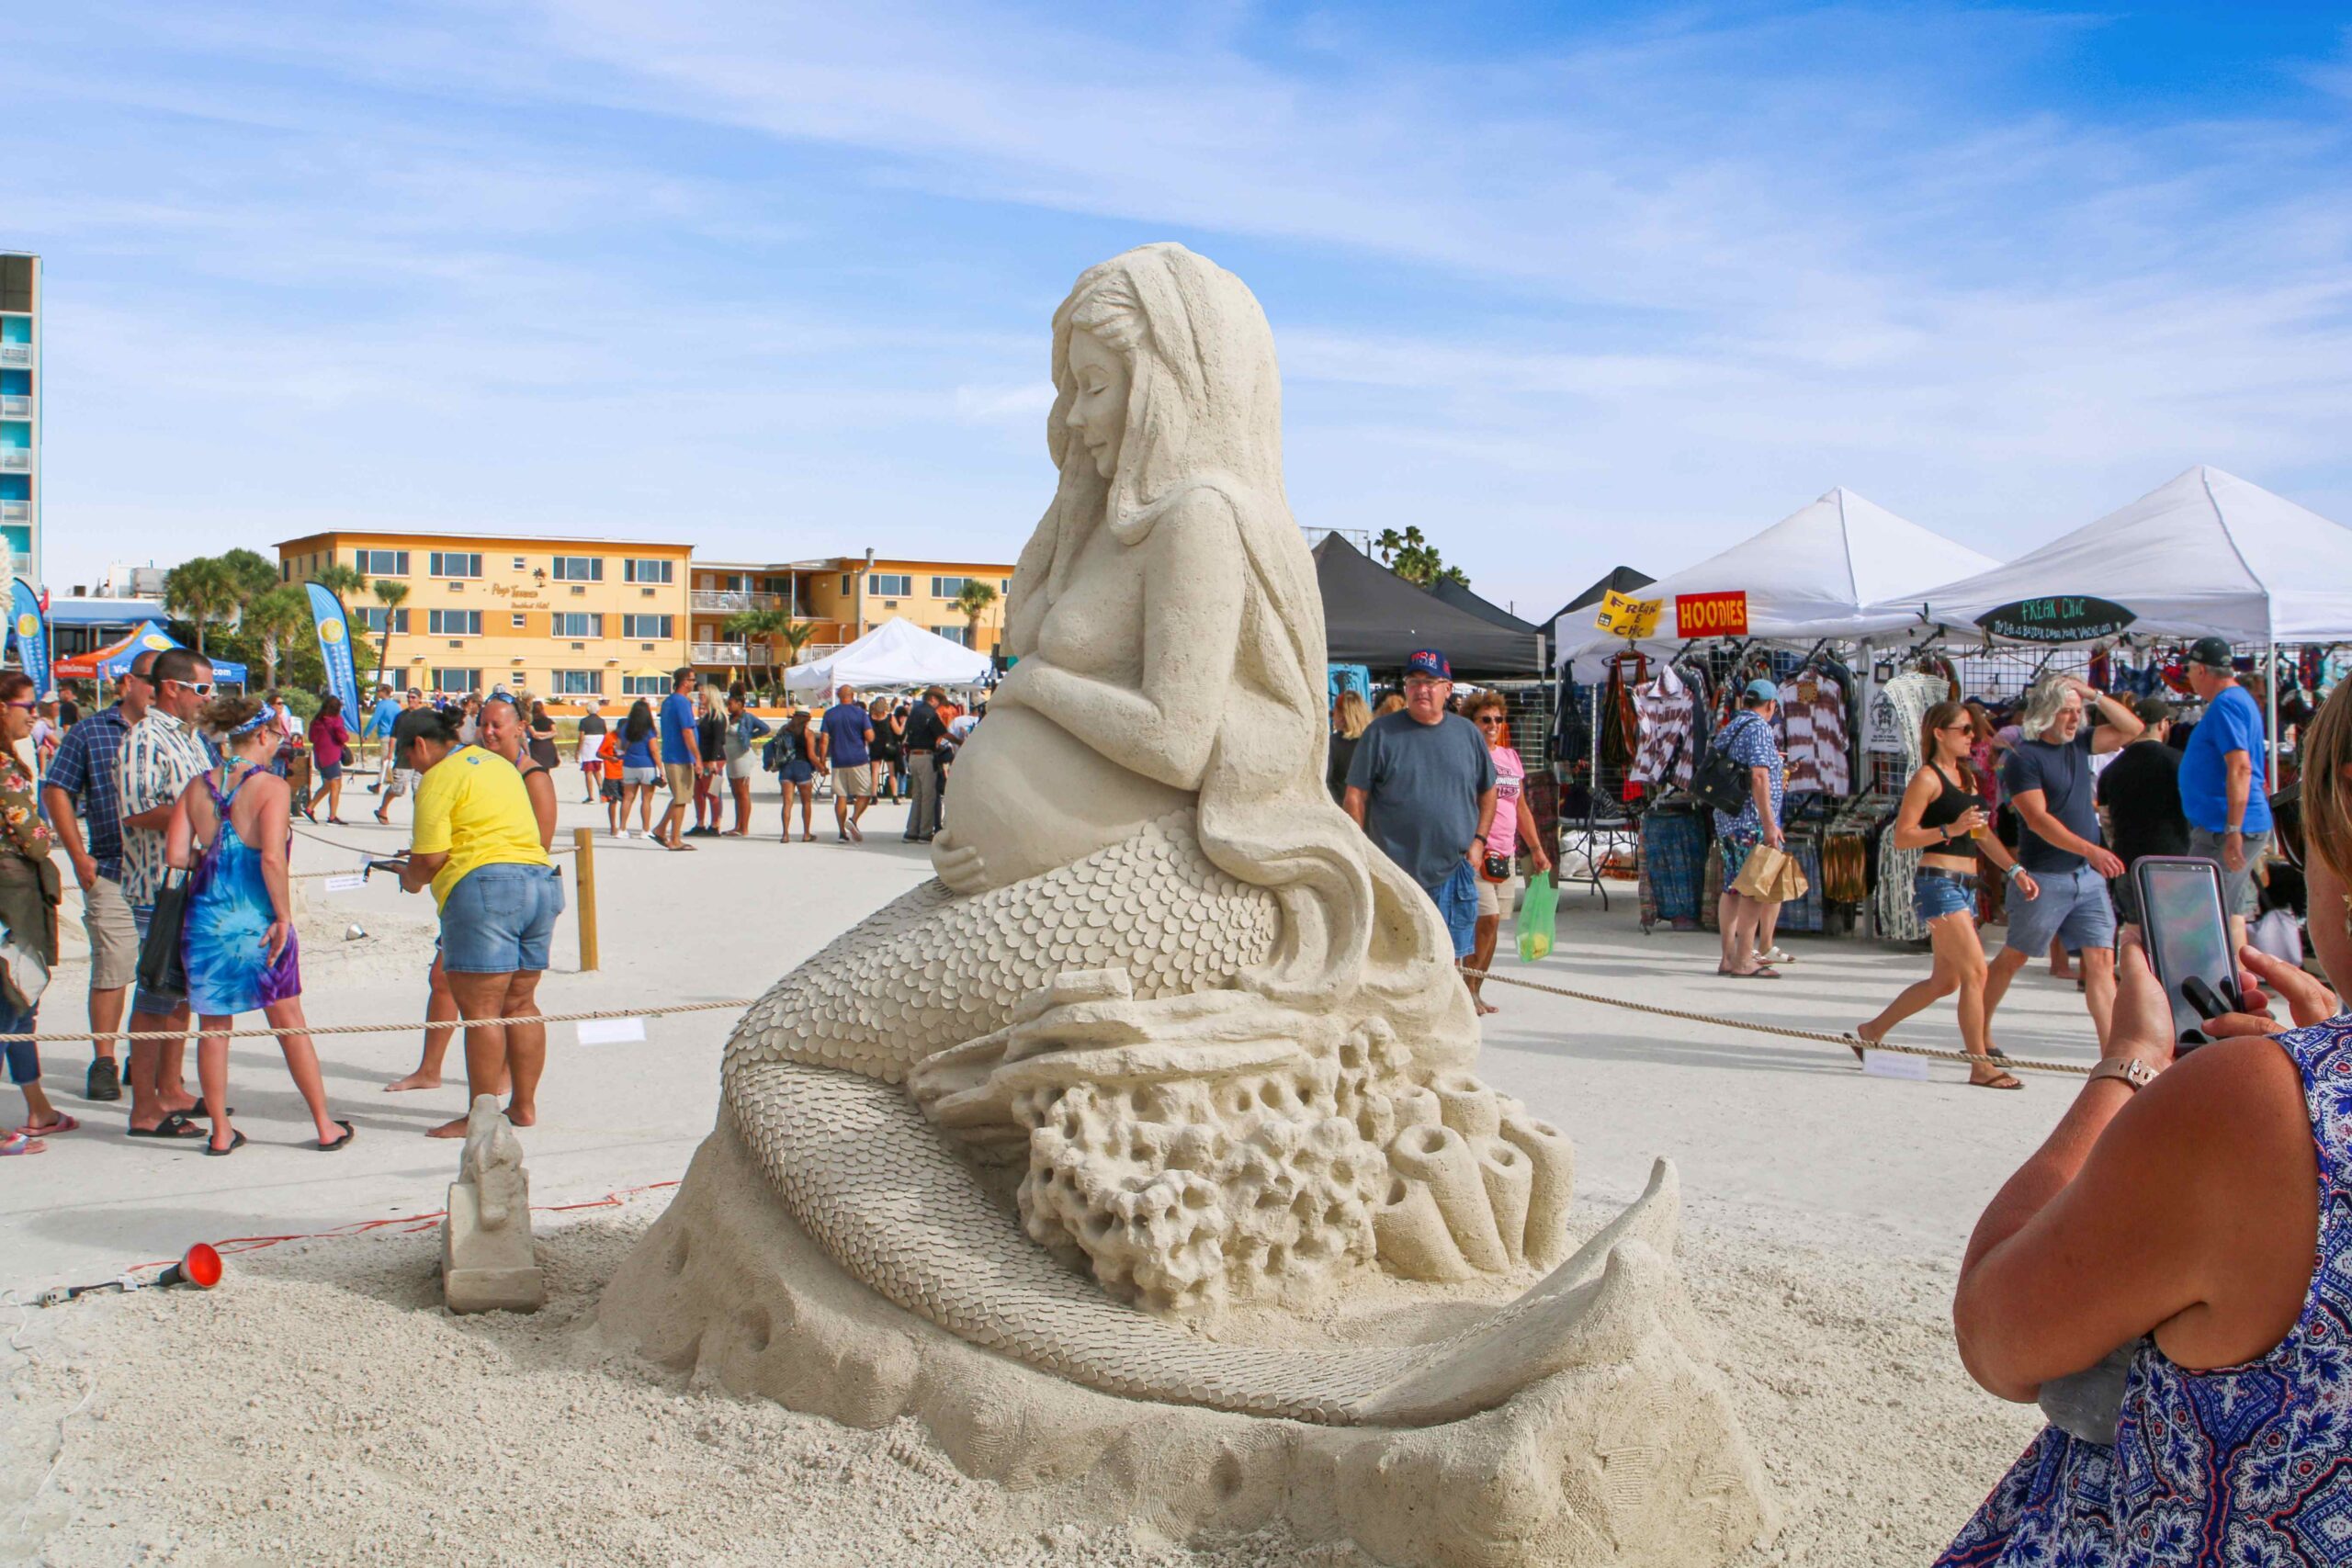 Building Disney Sand Sculptures on the Beach 